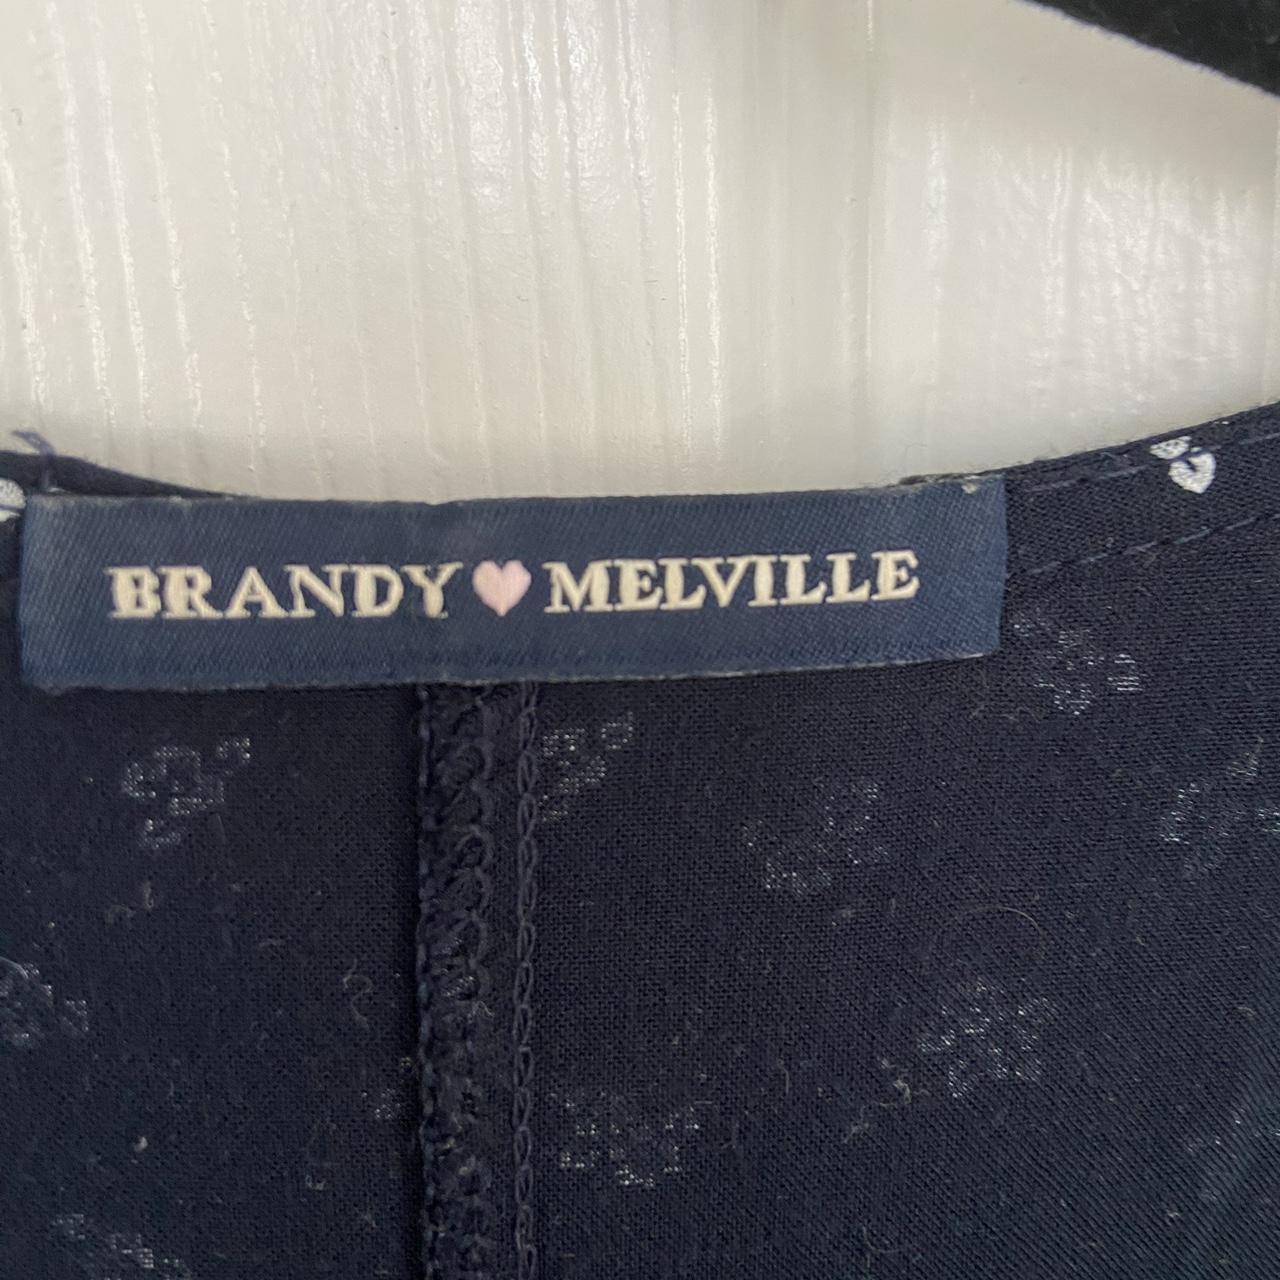 Adorable brandy Melville wrap dress - Depop